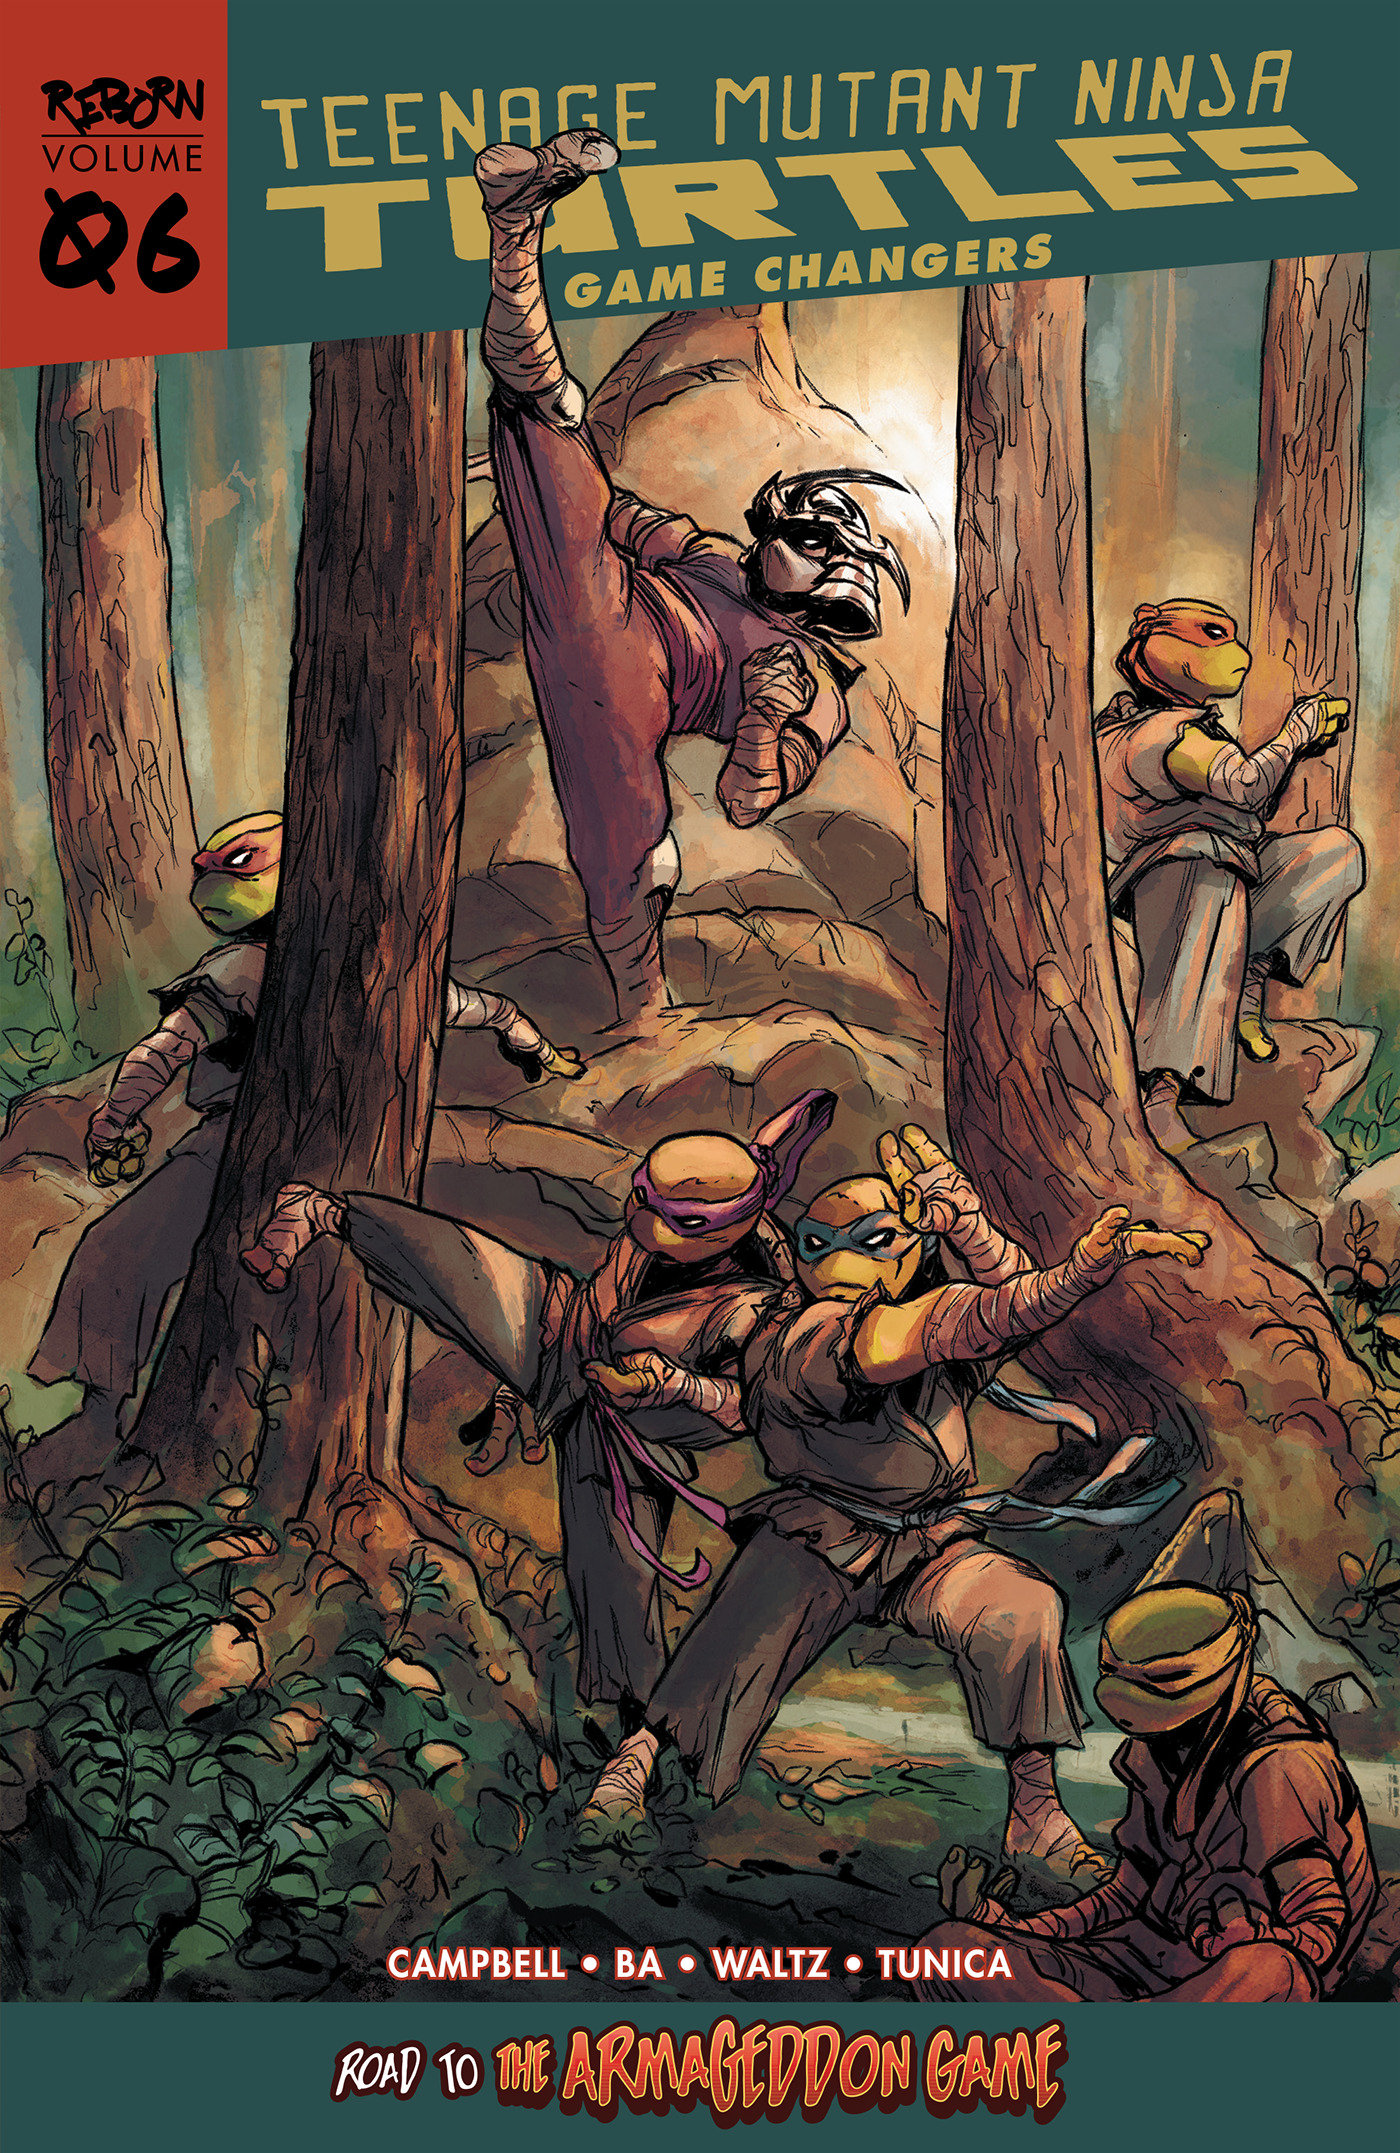 Teenage Mutant Ninja Turtles Reborn Graphic Novel Volume 6 Game Changers